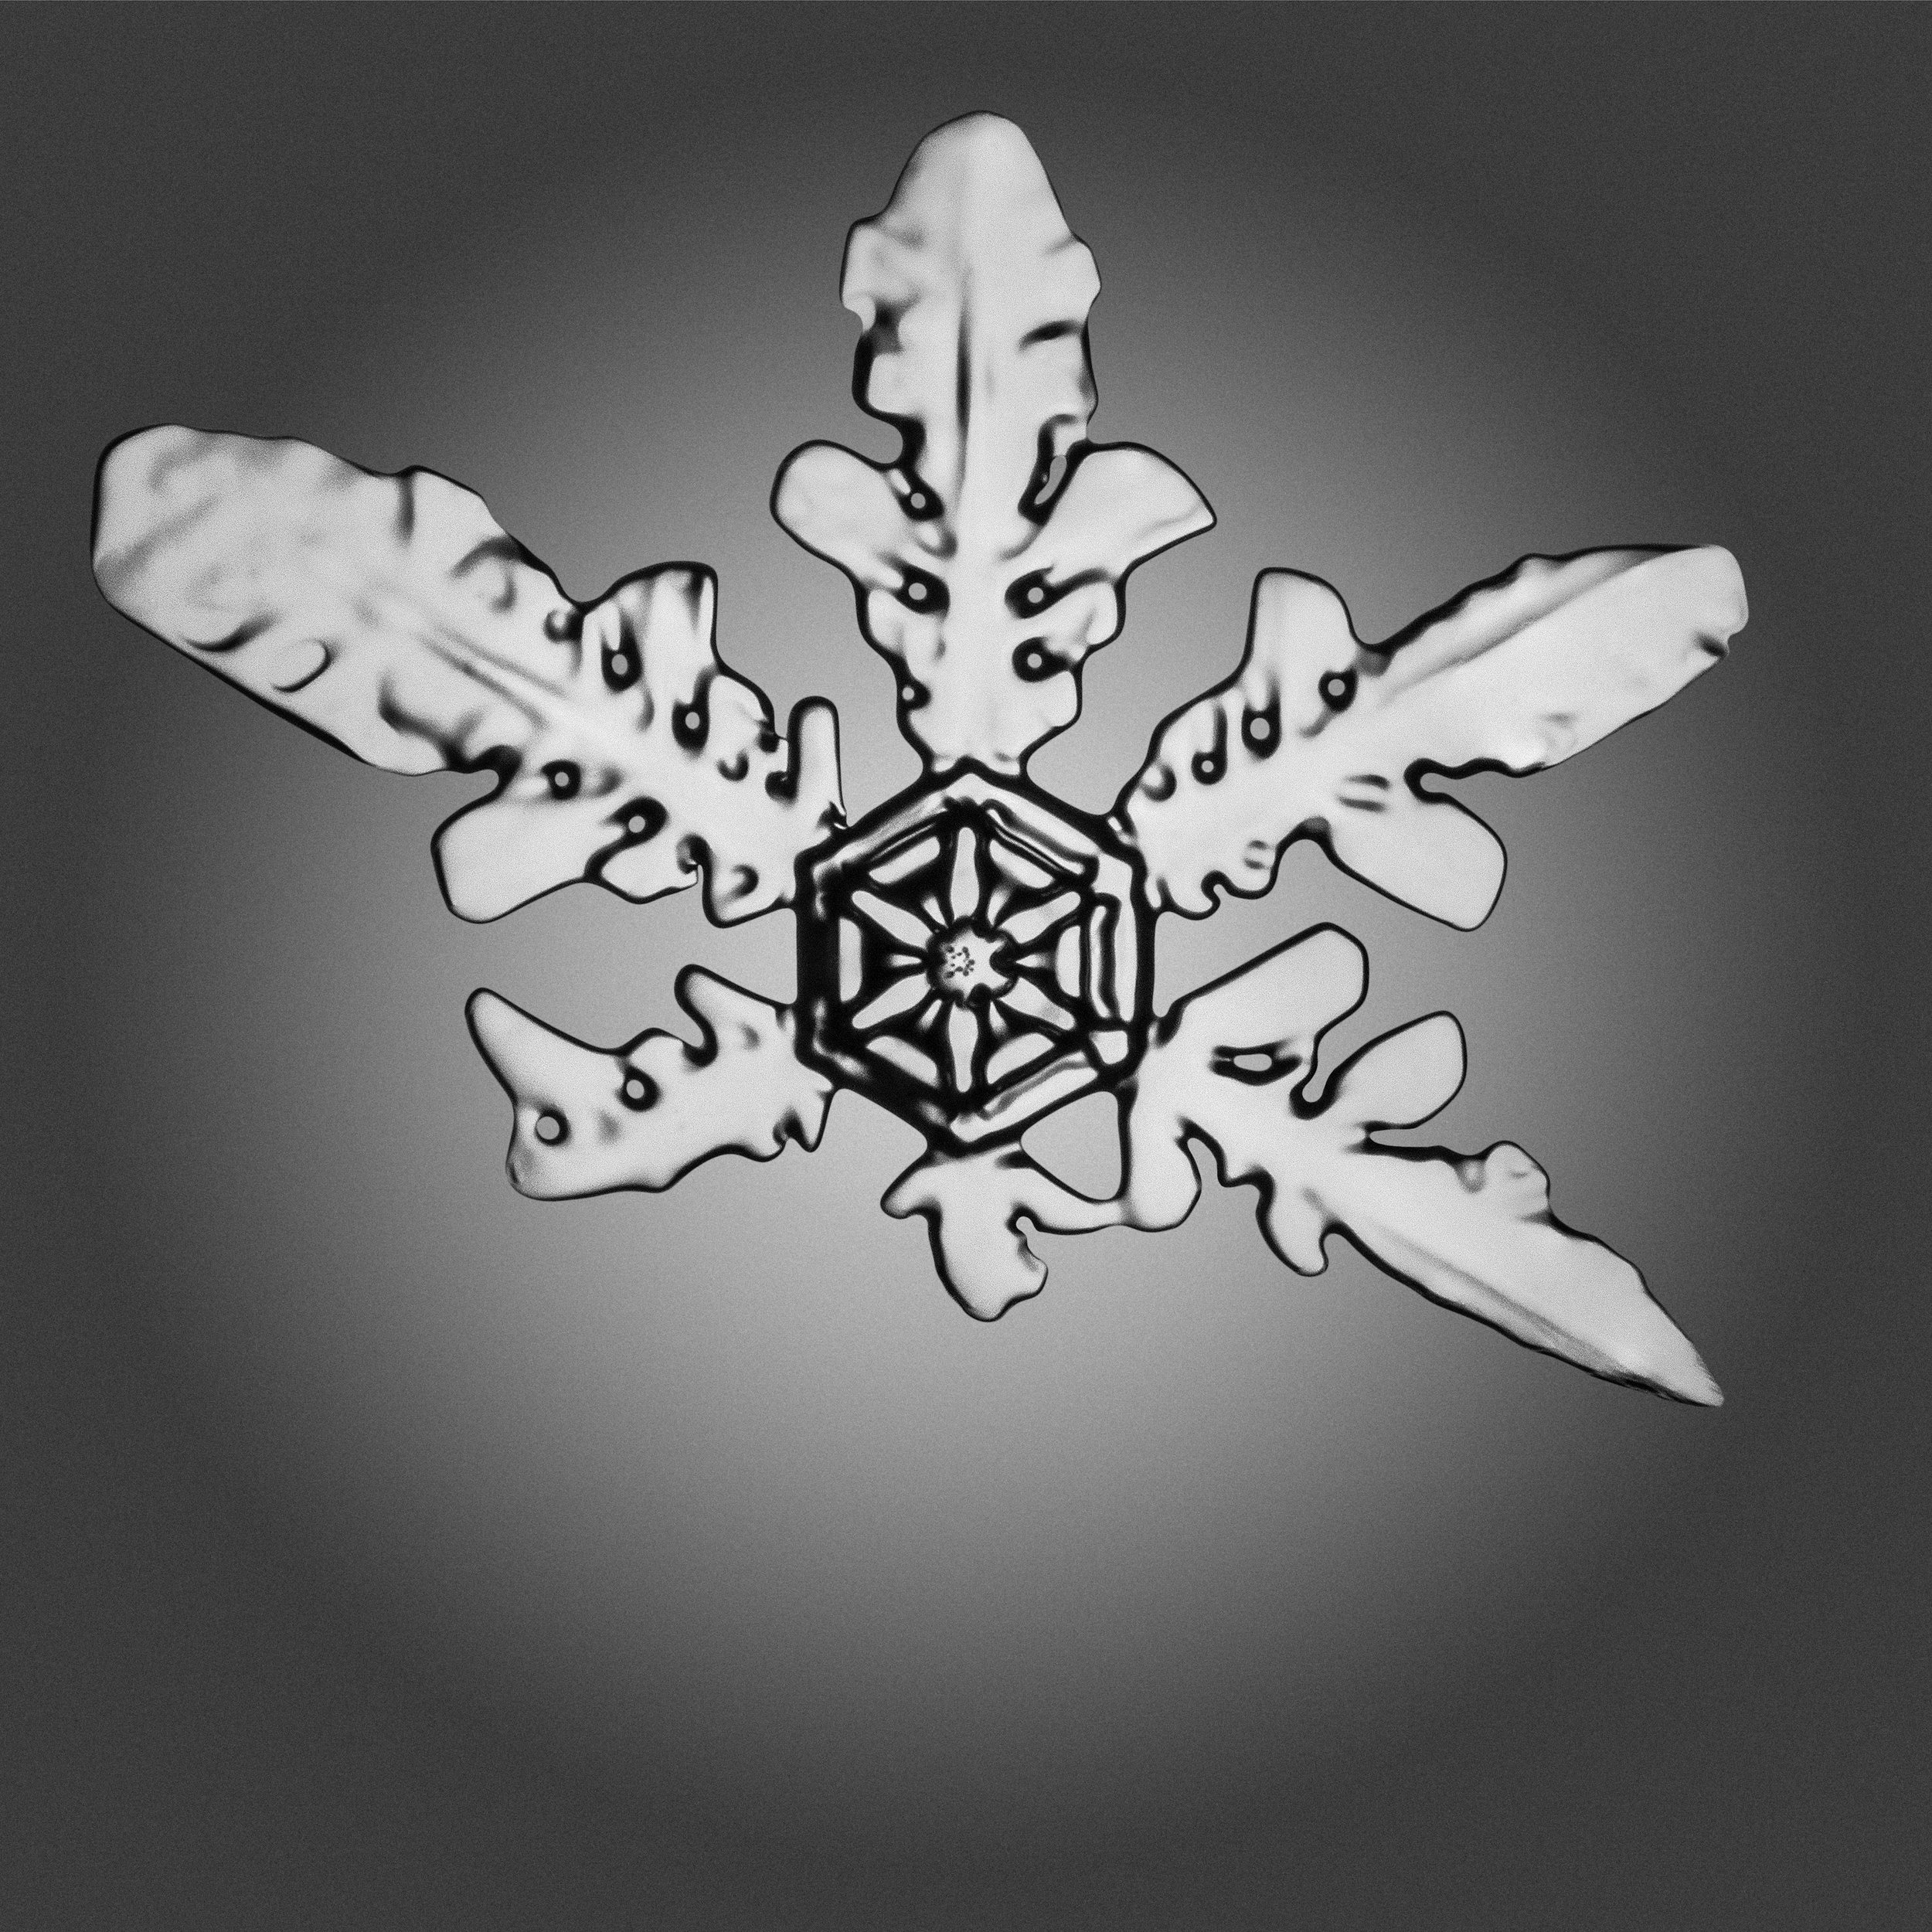 19_Snowflakes_40x40.jpg